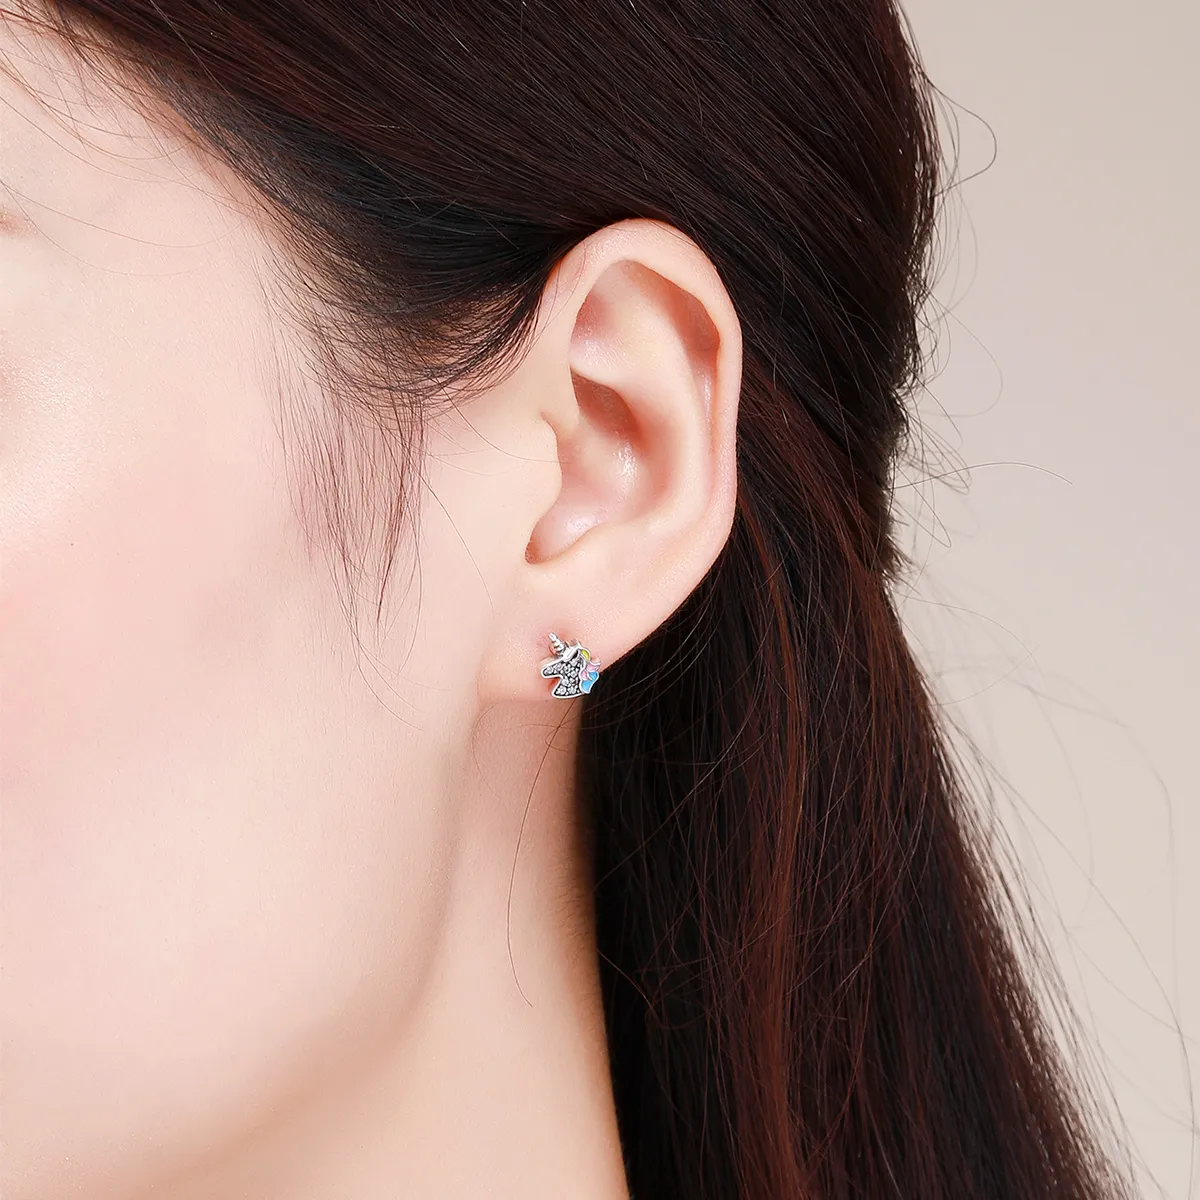 Pandora Style Silver Unicorn Memory Stud Earrings - SCE426